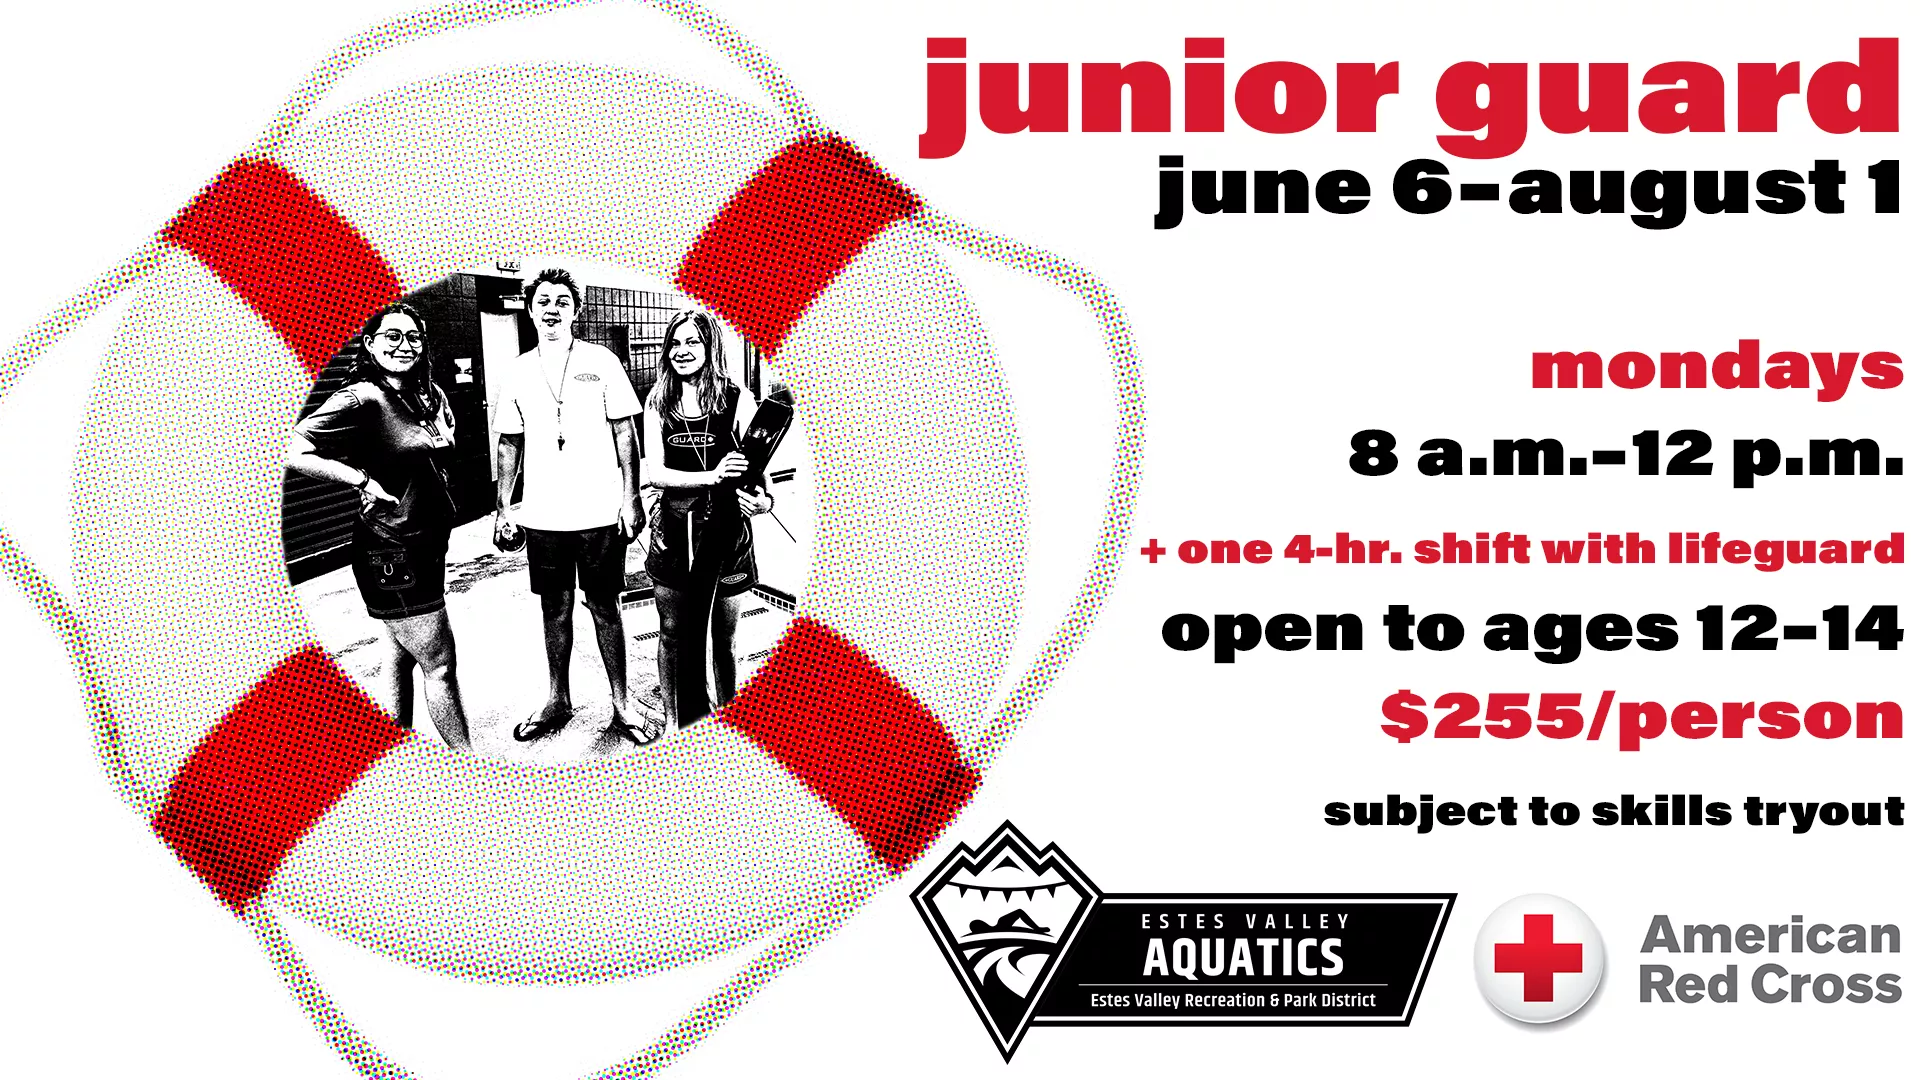 Junior lifeguard program for kids age 12 - 14